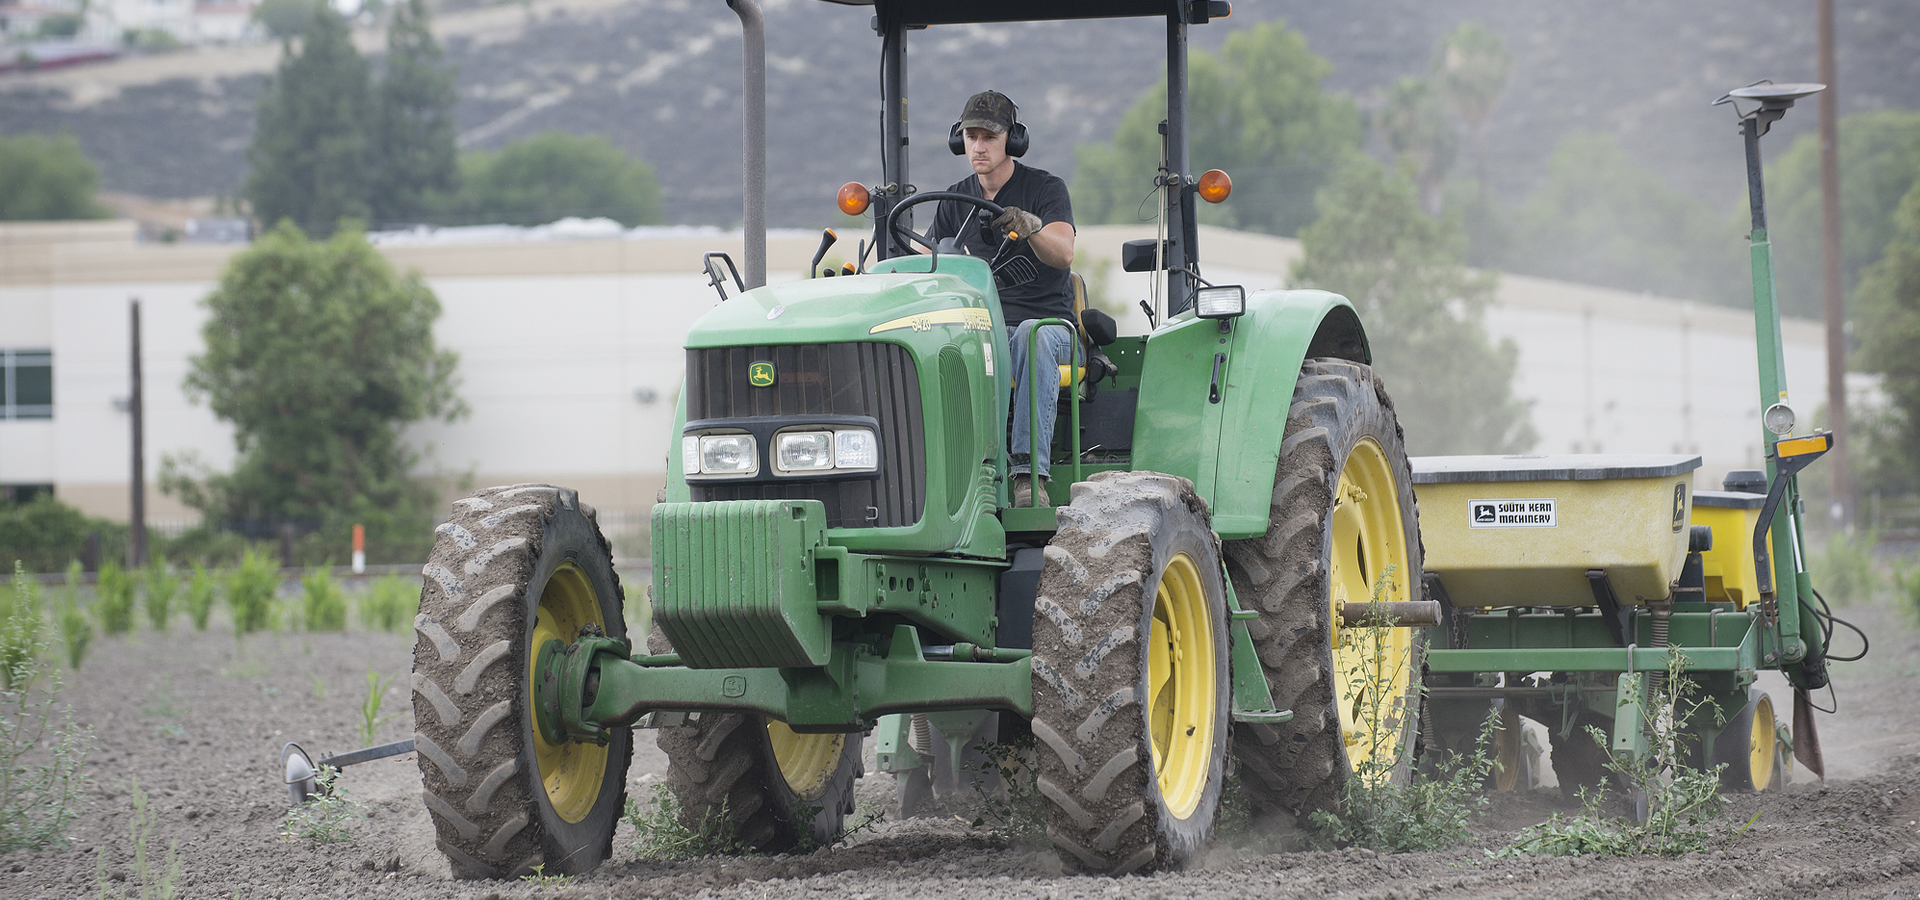 a senior plant science major, drives a tractor at Spadra Ranch